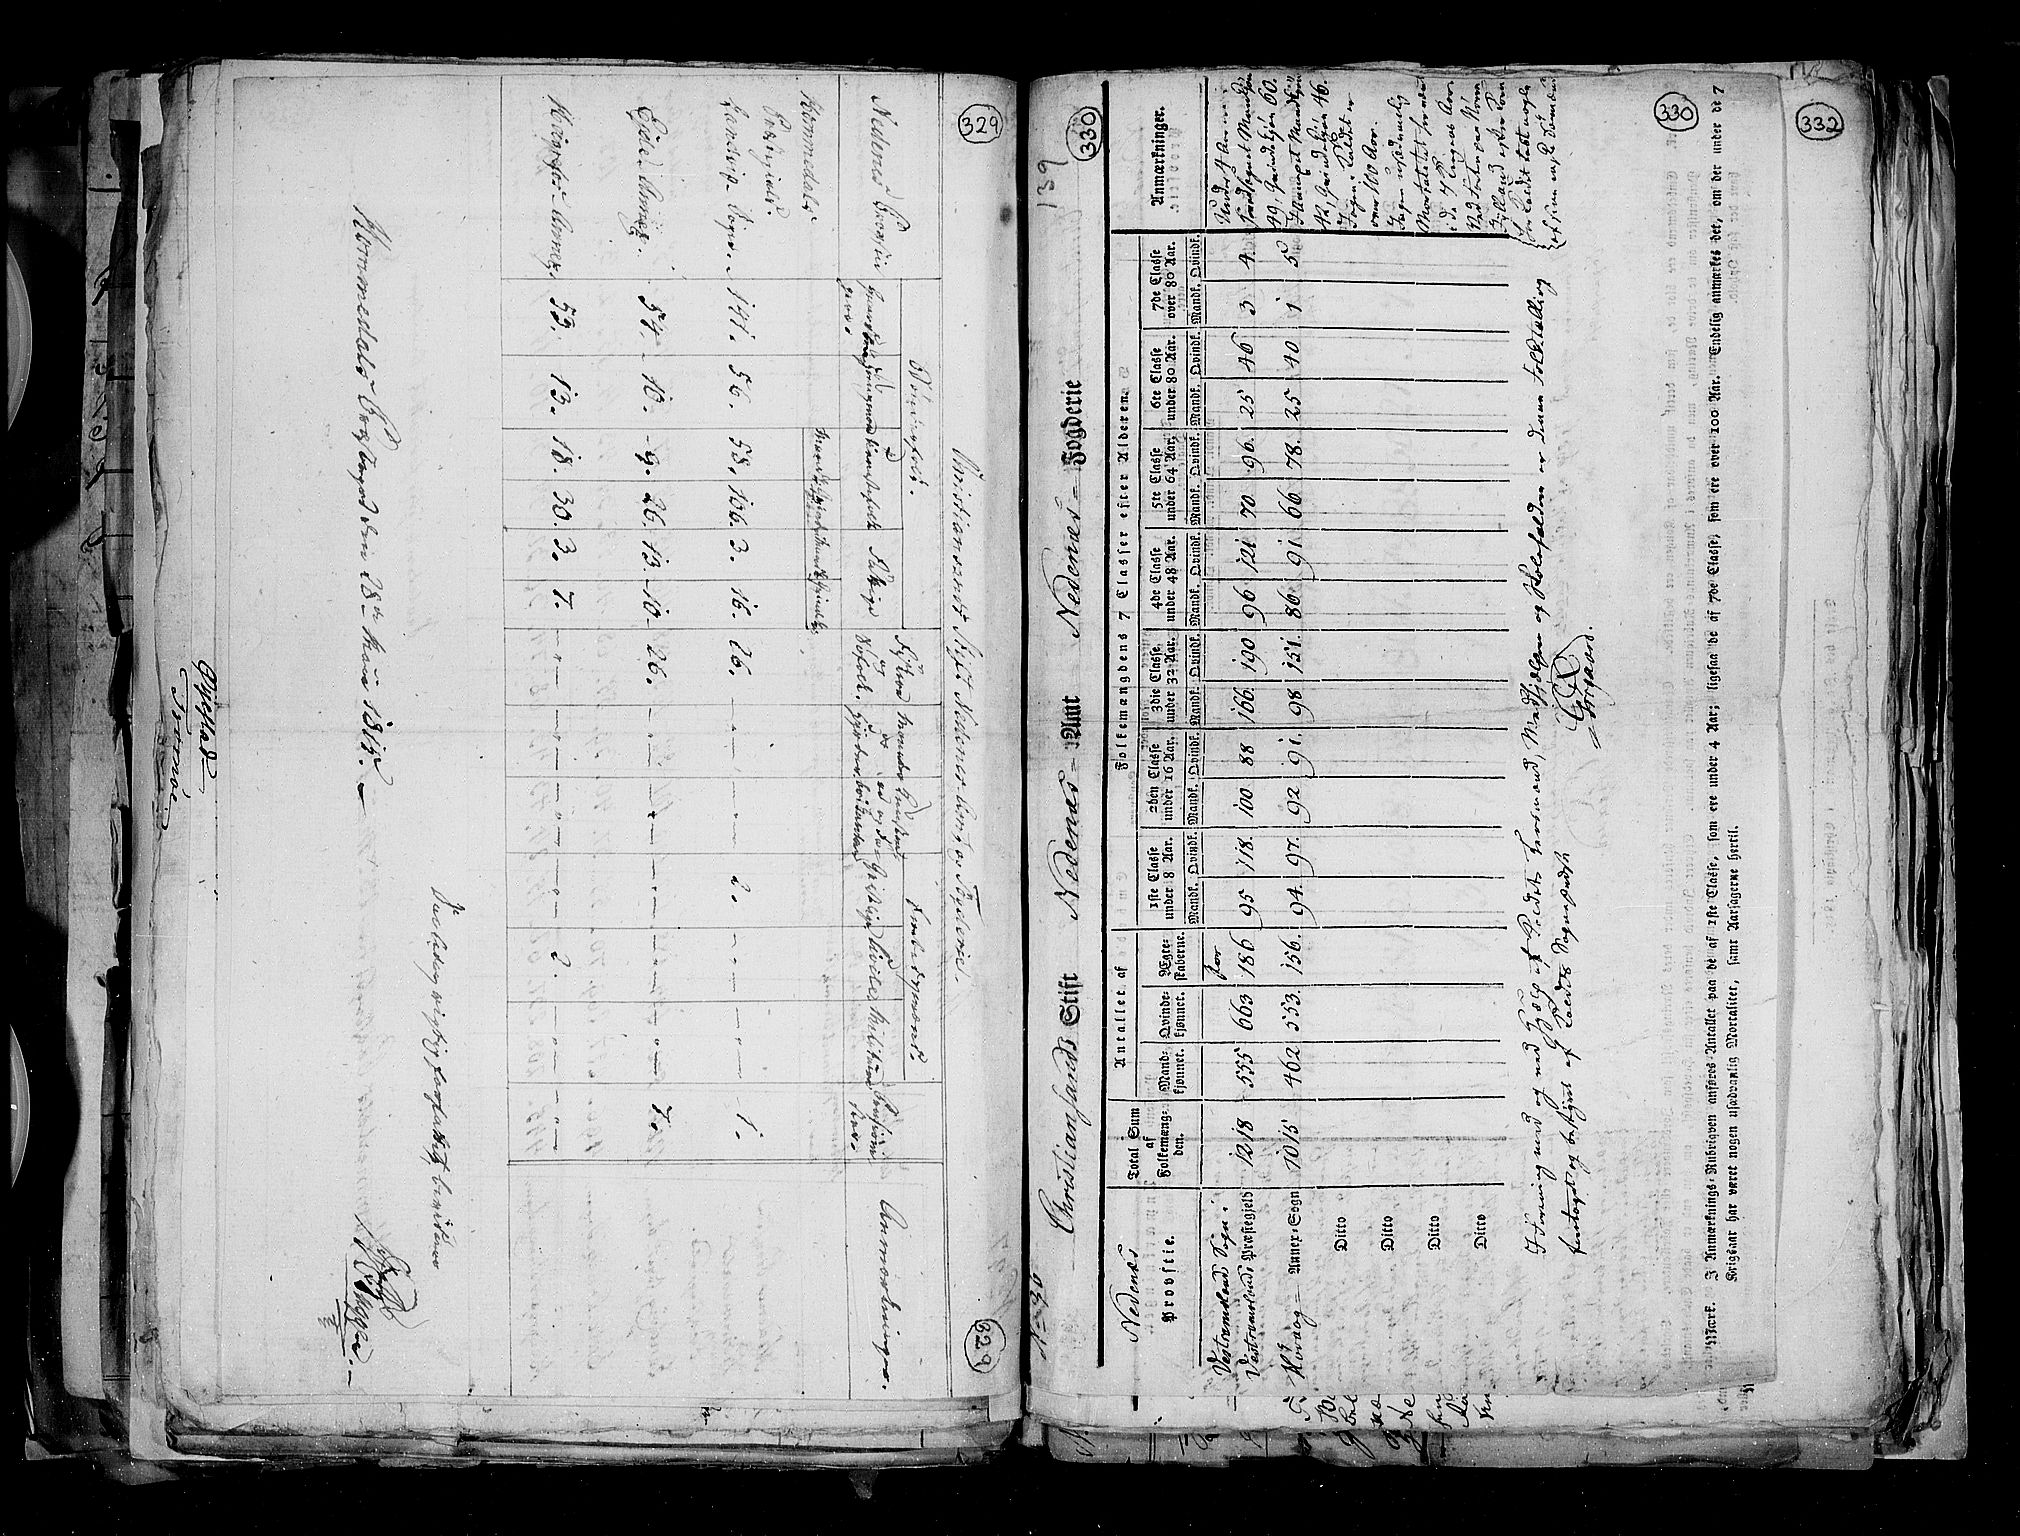 RA, Census 1815, vol. 1: Akershus stift and Kristiansand stift, 1815, p. 236